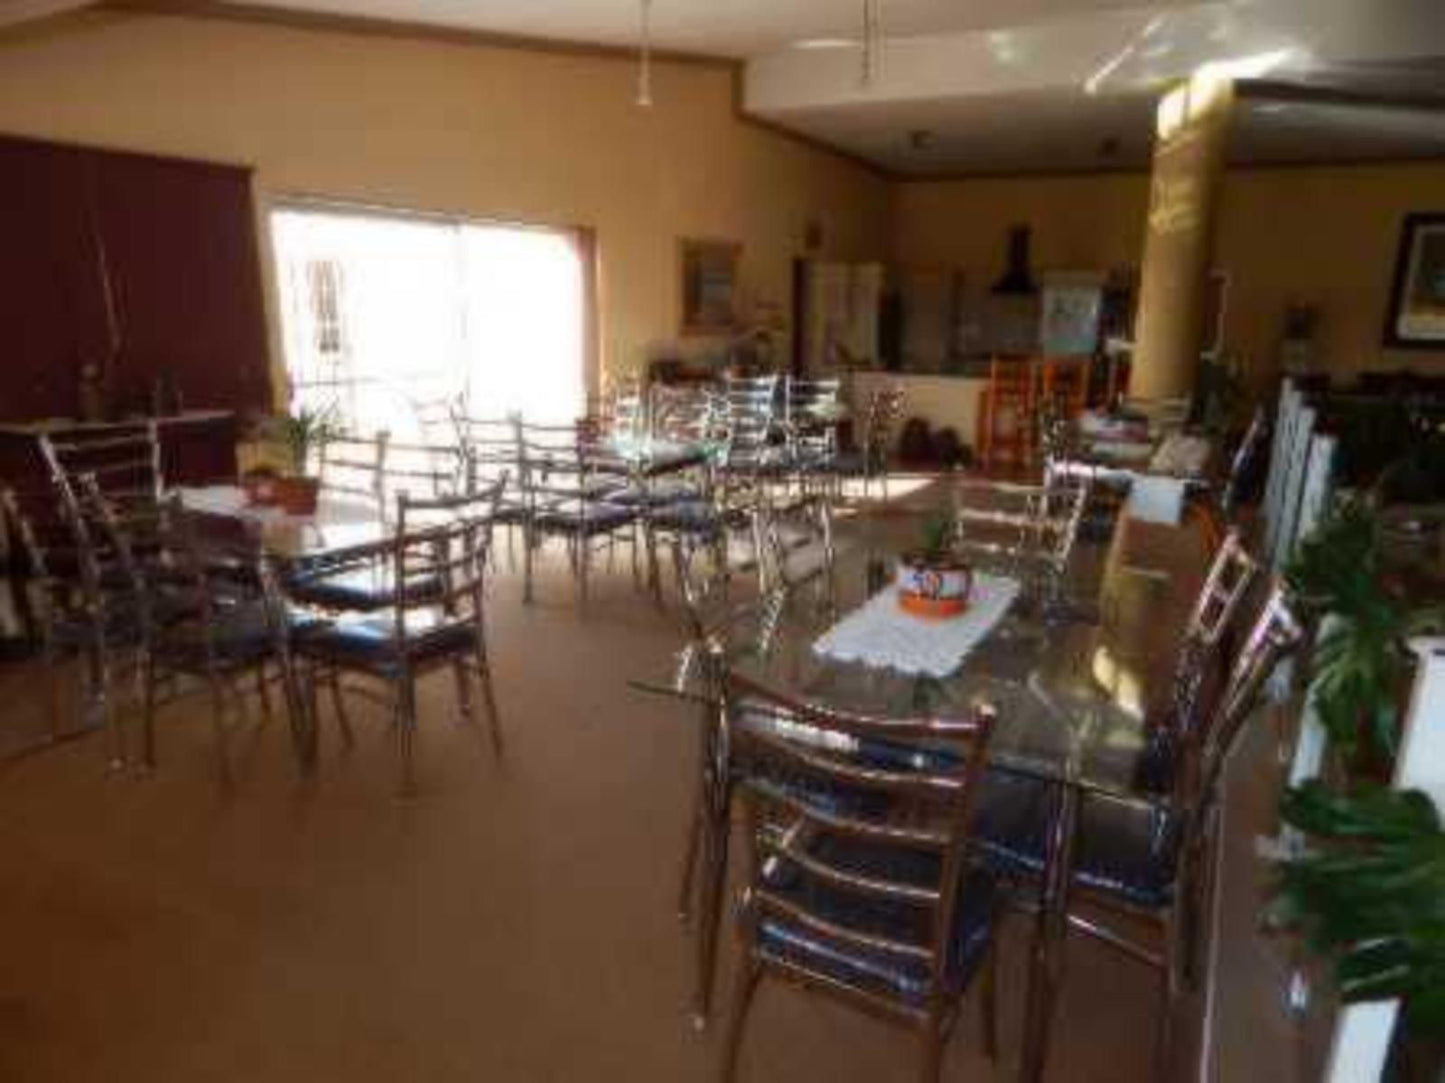 Everwood Guest House Wilkoppies Klerksdorp North West Province South Africa Restaurant